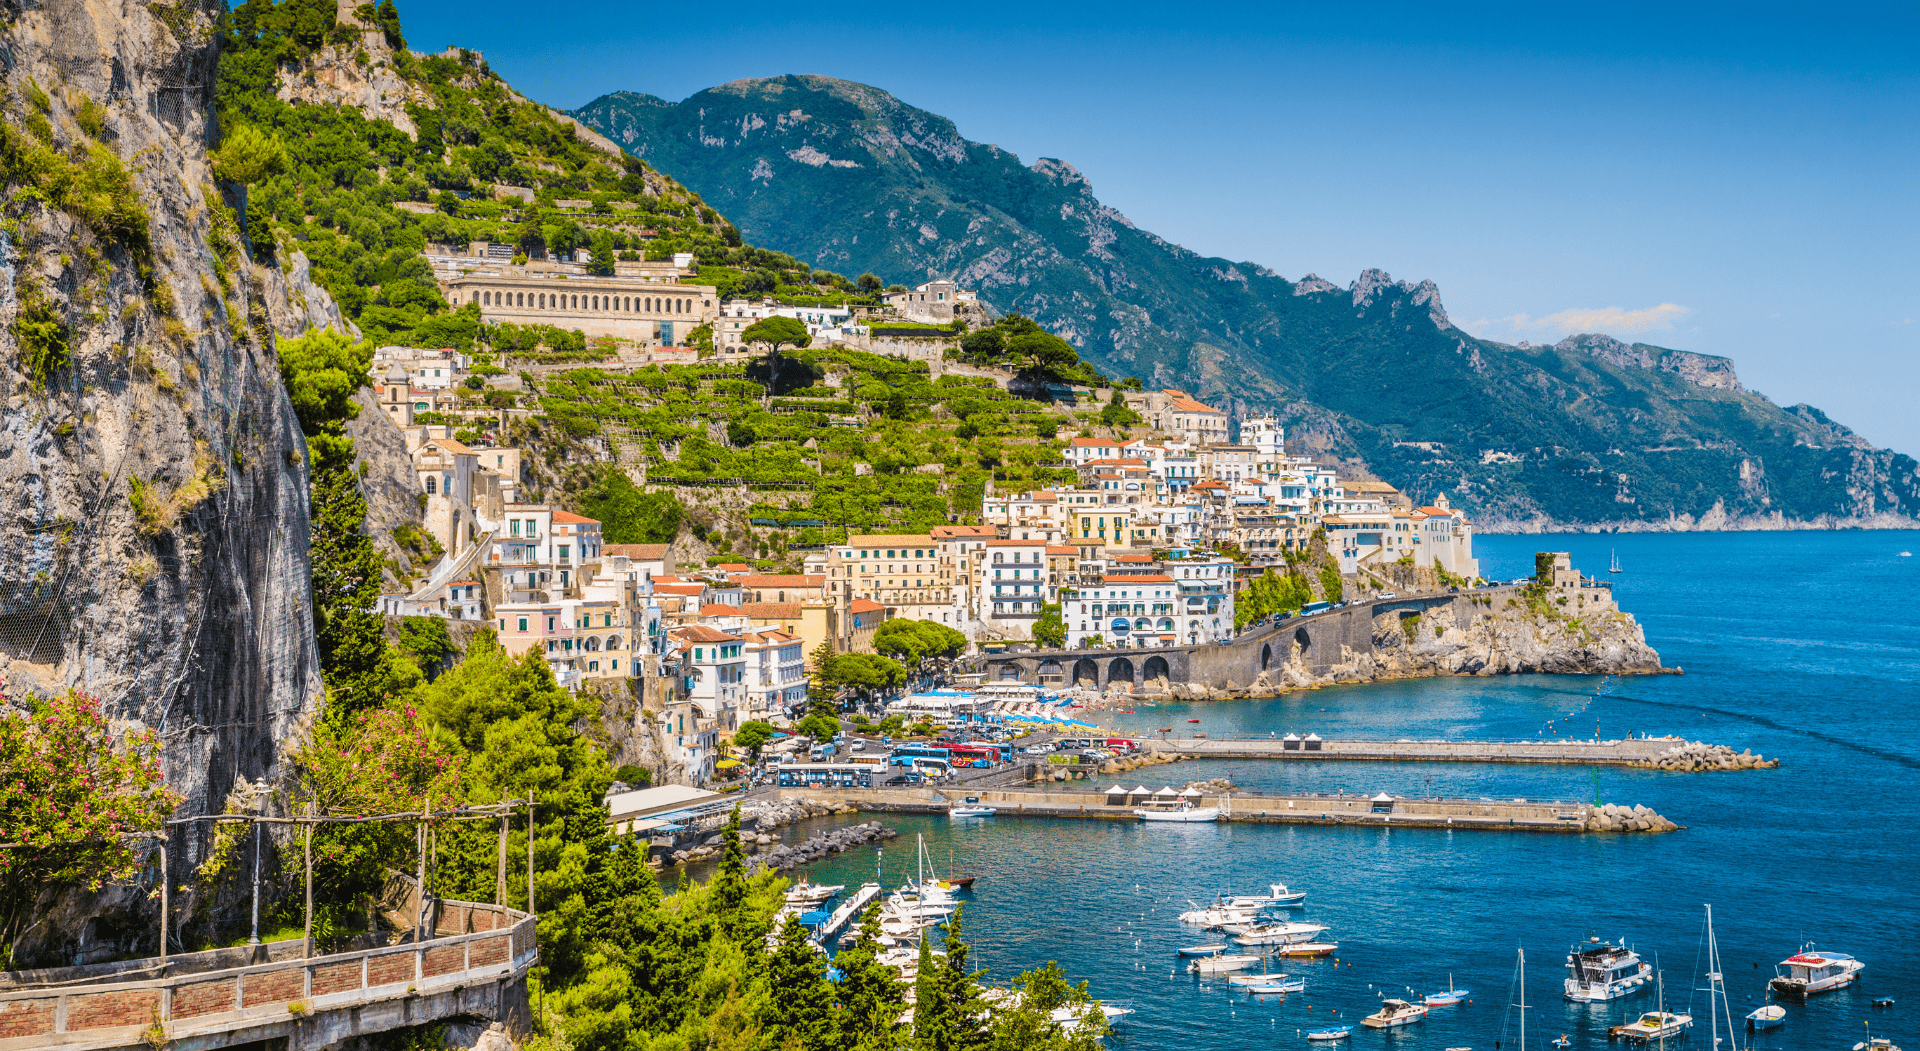 Costa Amalfitana o Cinque Terre: ¿cuál es mejor?